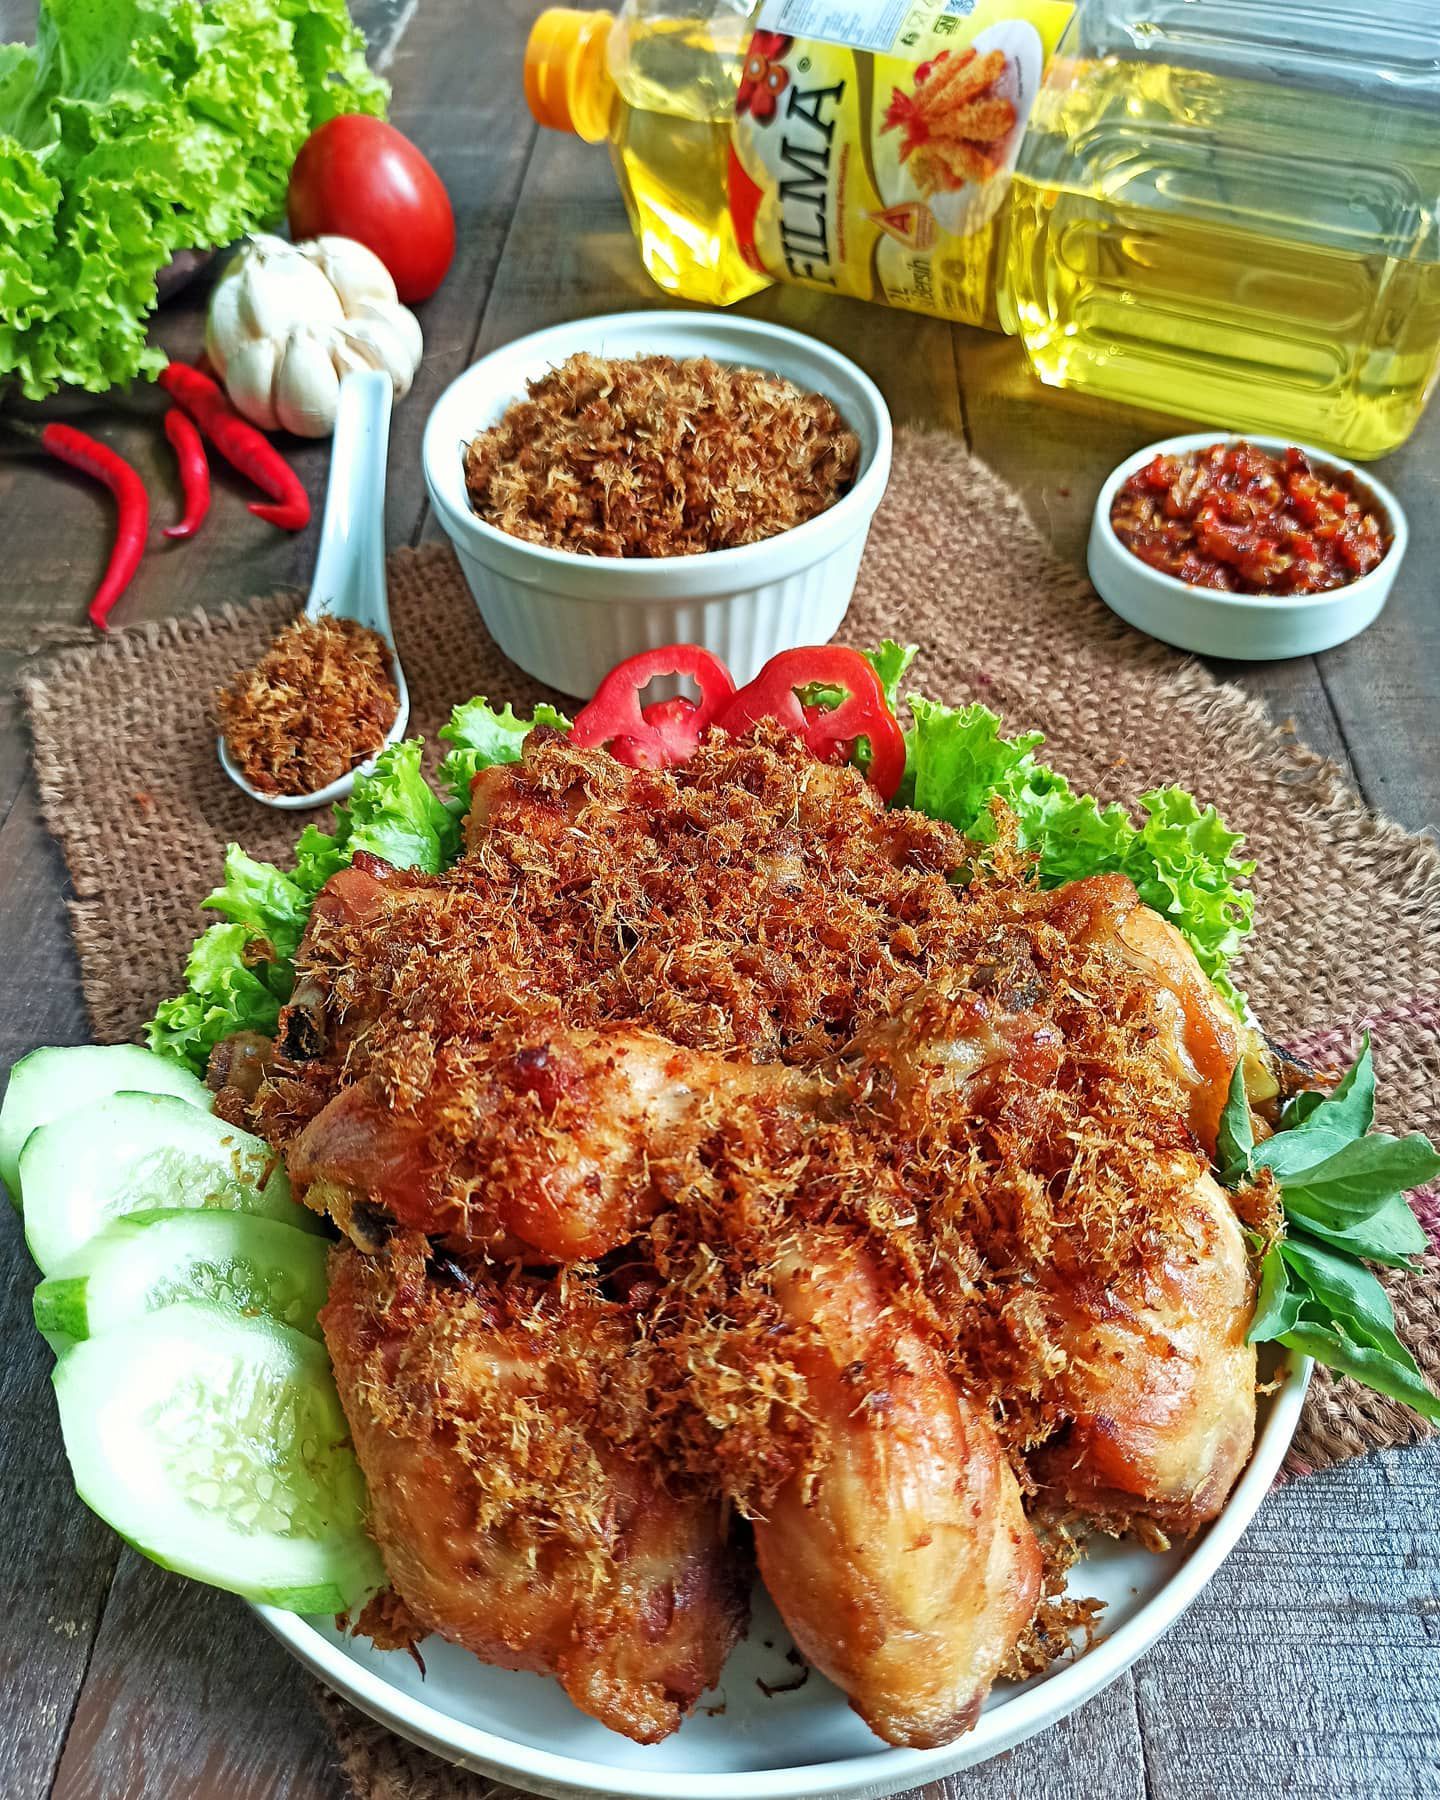 Resep Masakan Ayam untuk Lebaran - Ayam Goreng Lengkuas